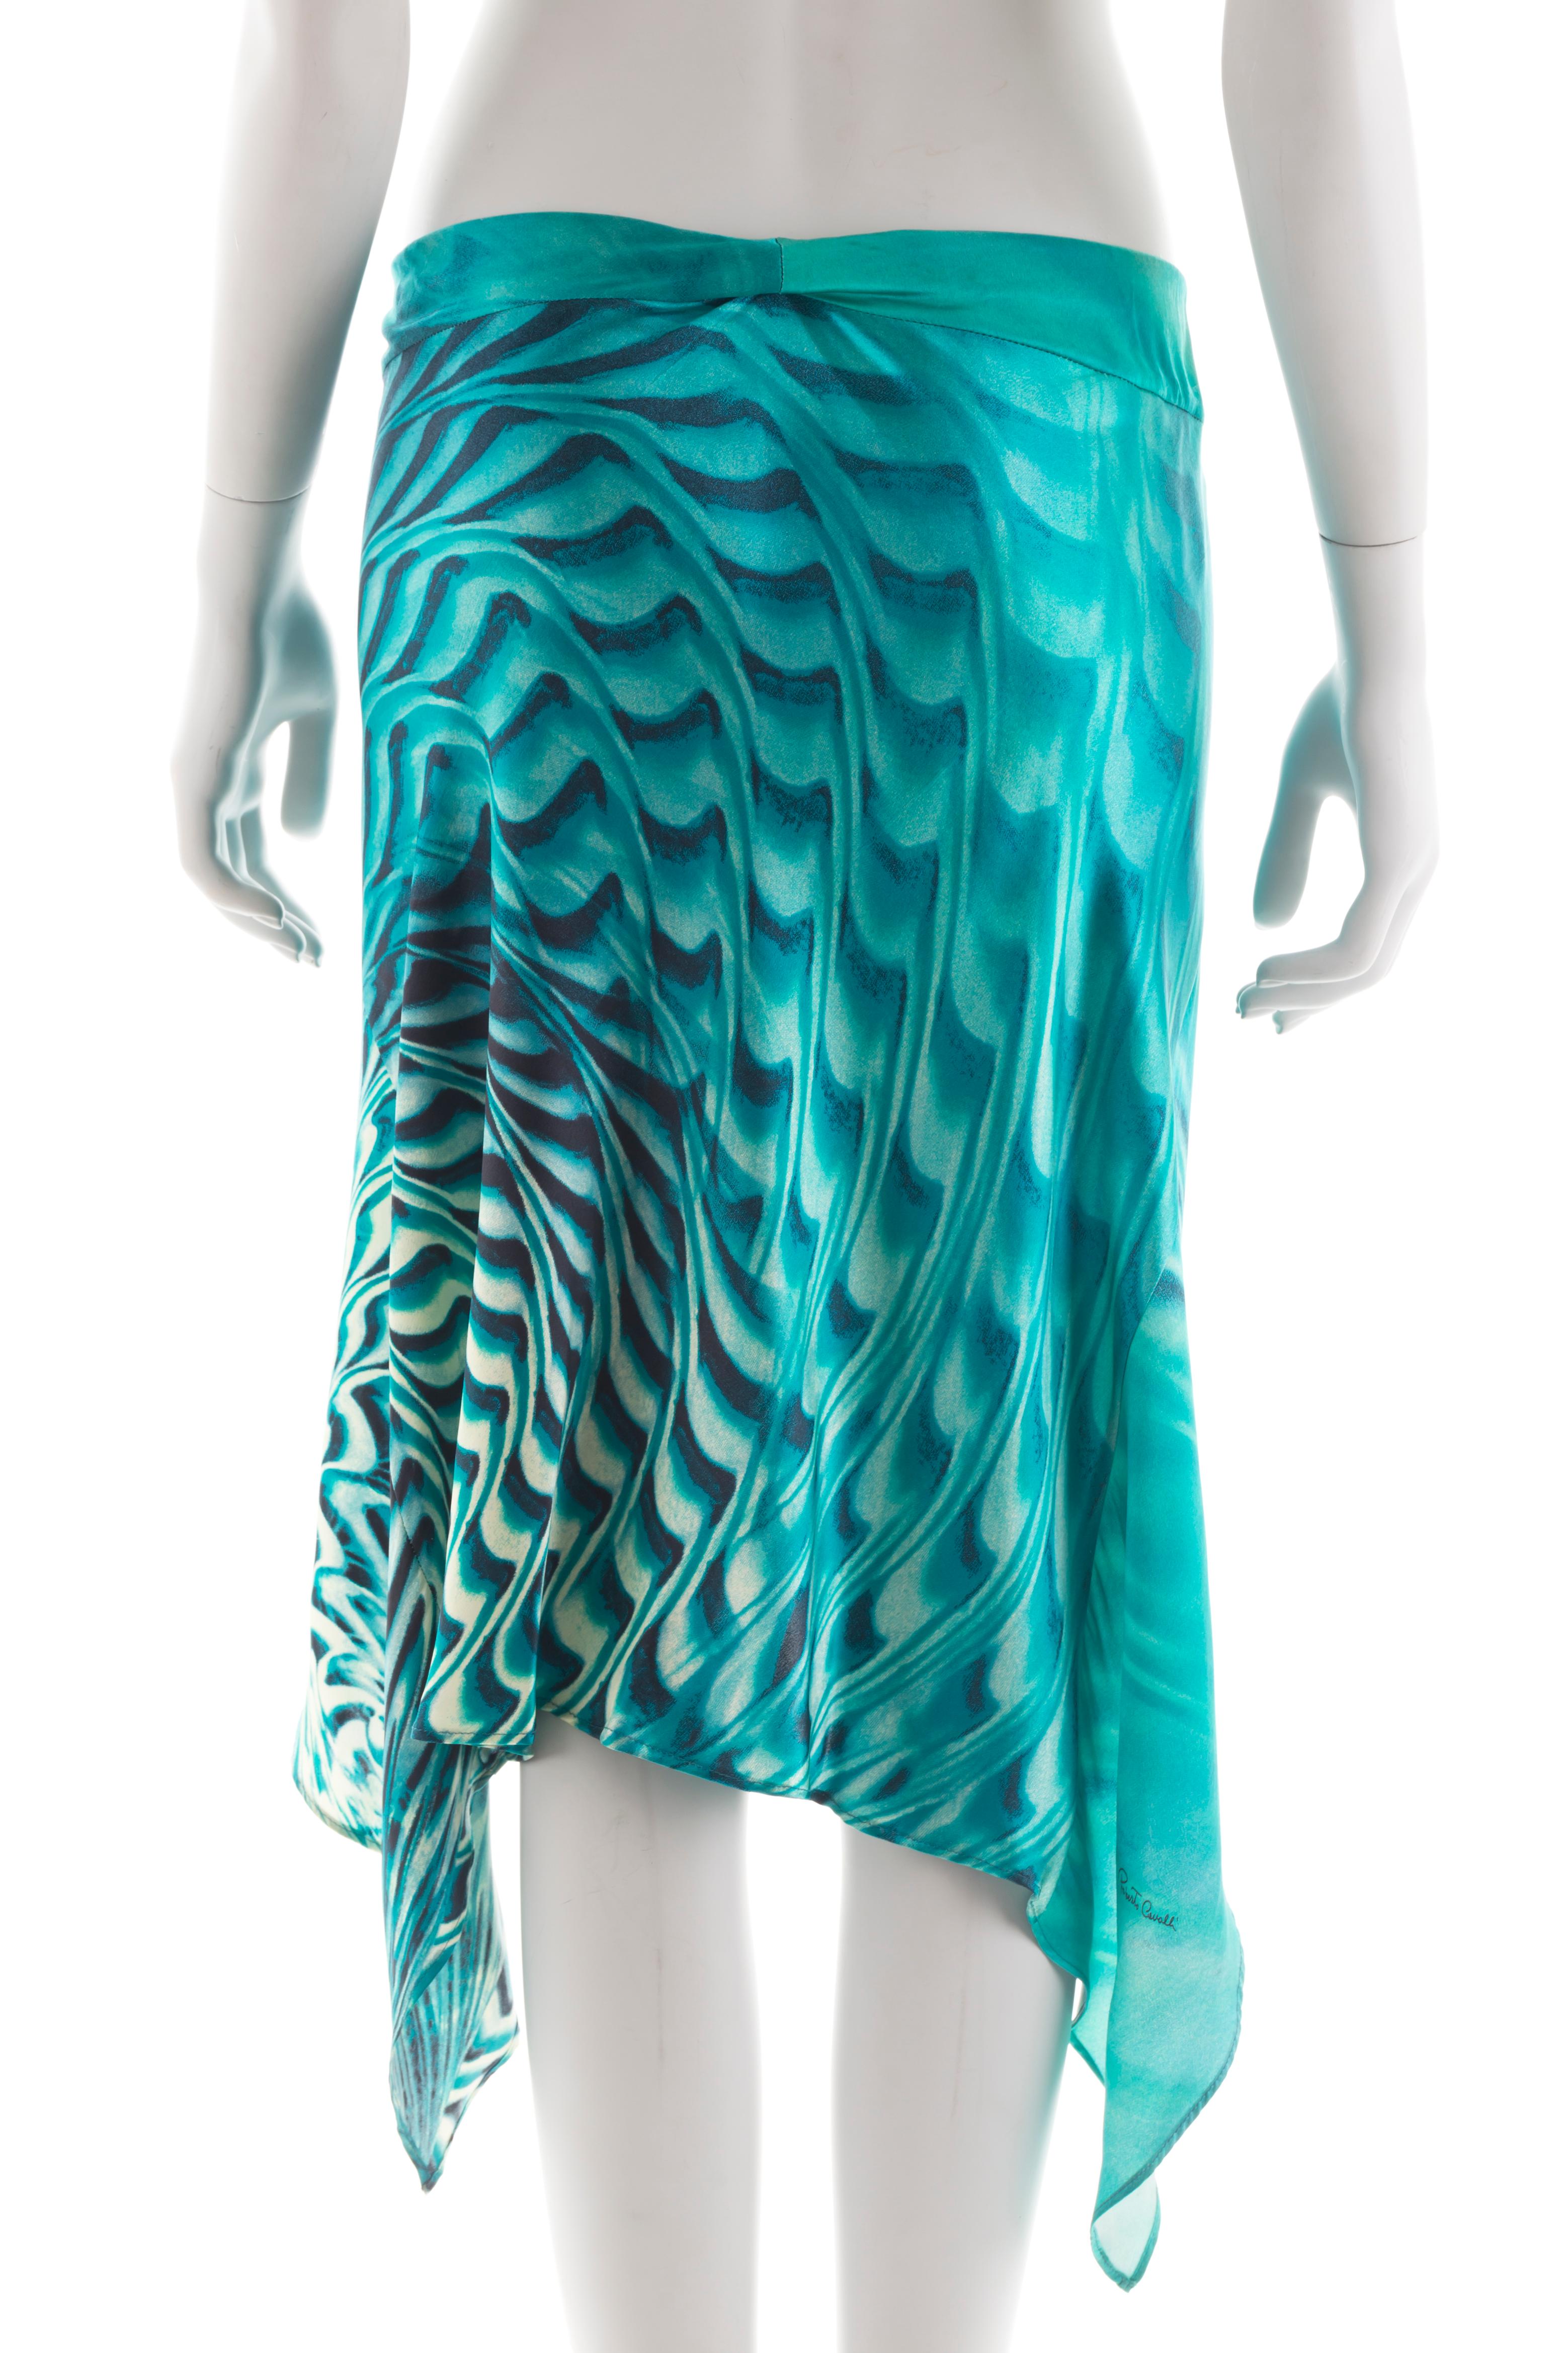 Blue Roberto Cavalli S/S 2001 blue asymmetrical “Peacock” print skirt For Sale